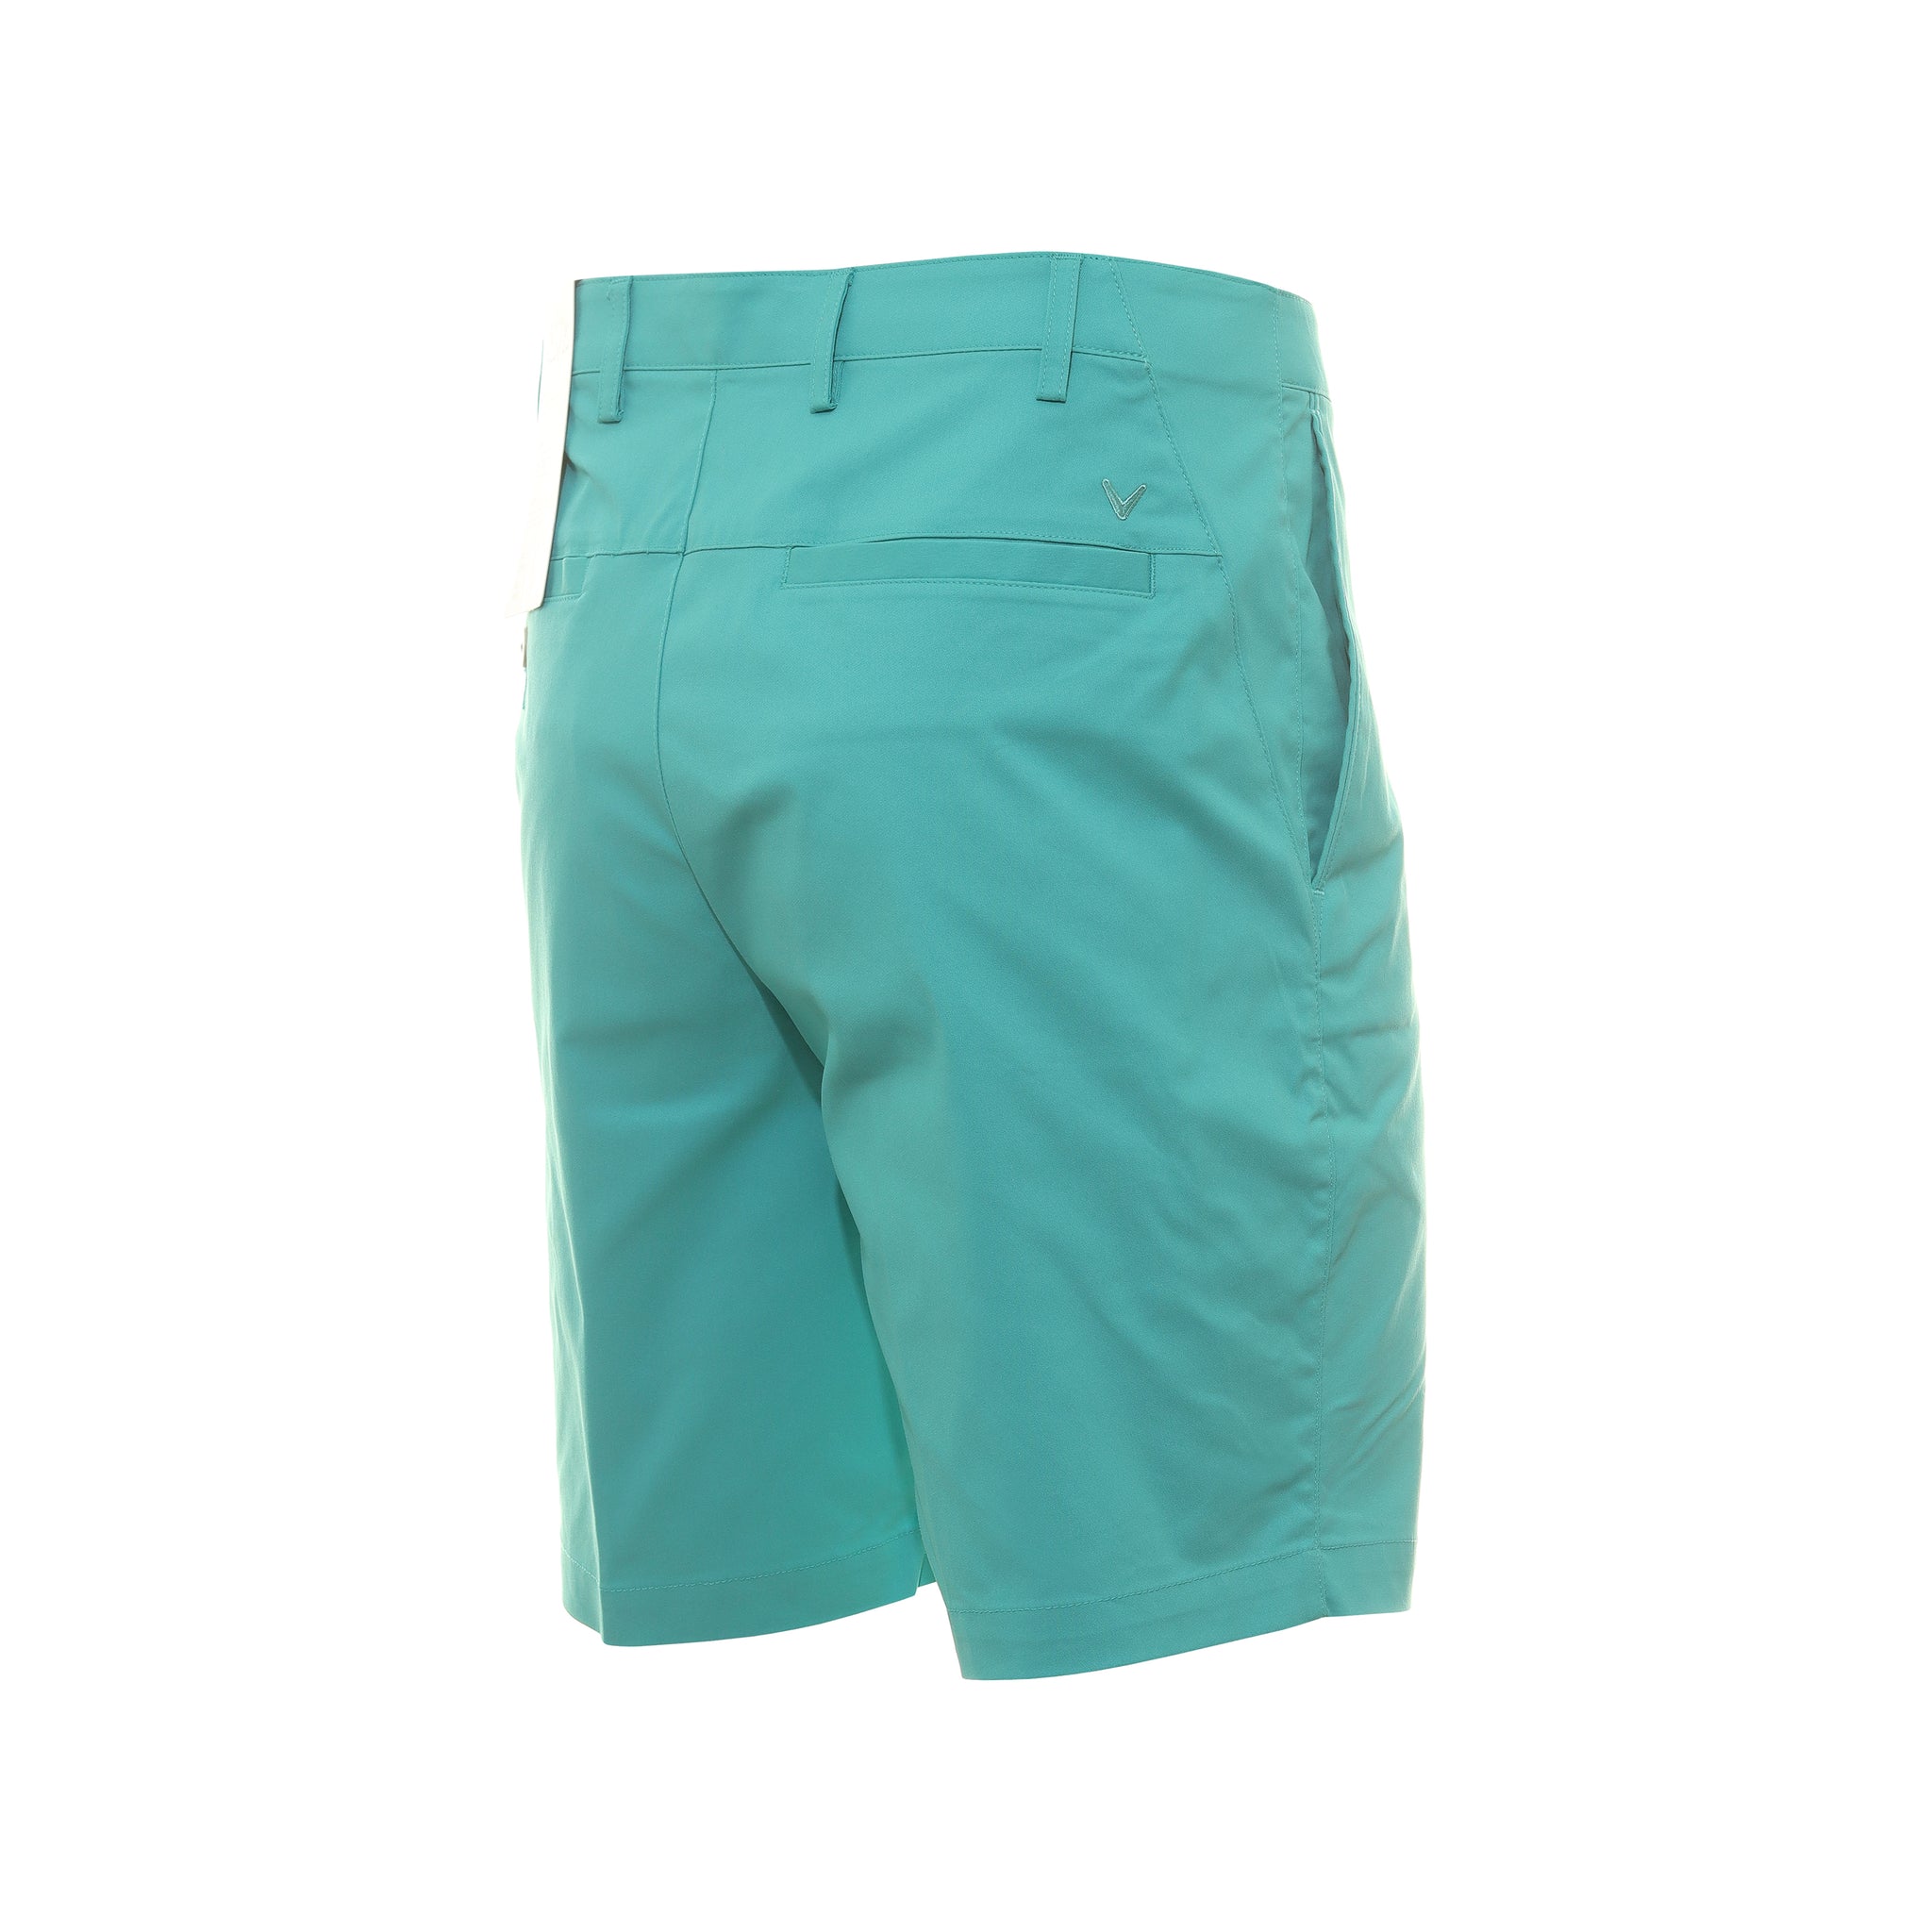 callaway-golf-x-series-flat-front-shorts-cgbsc053-baltic-399